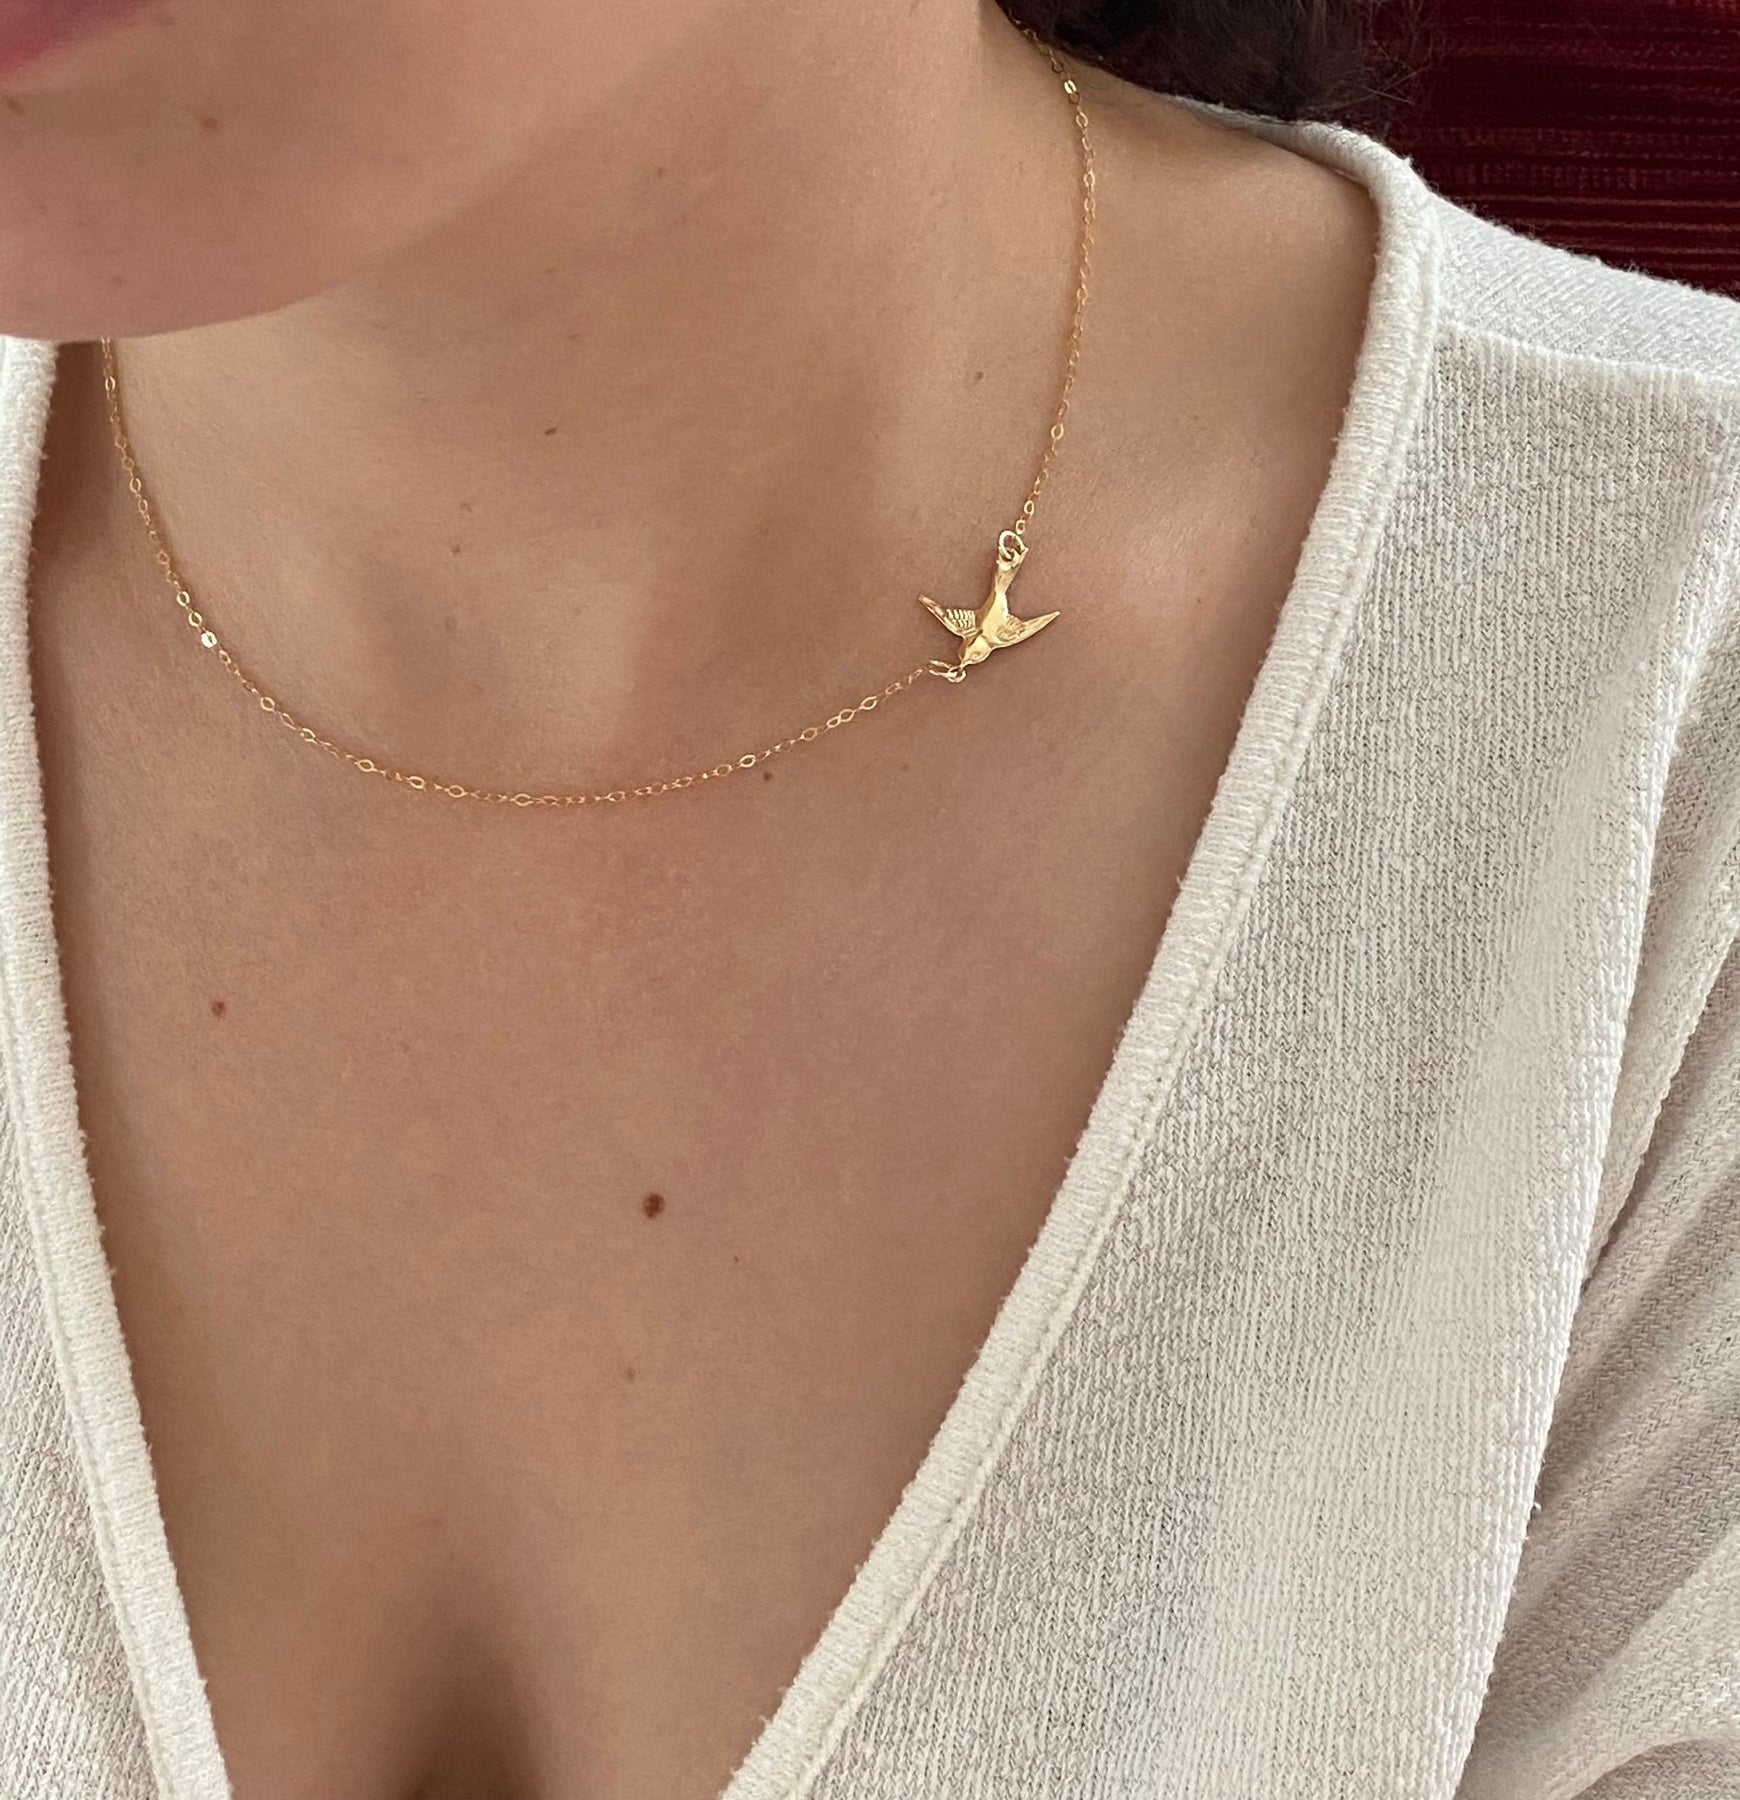 Sparrow necklace gold swallow necklace bird necklace tiny gold bird pendant